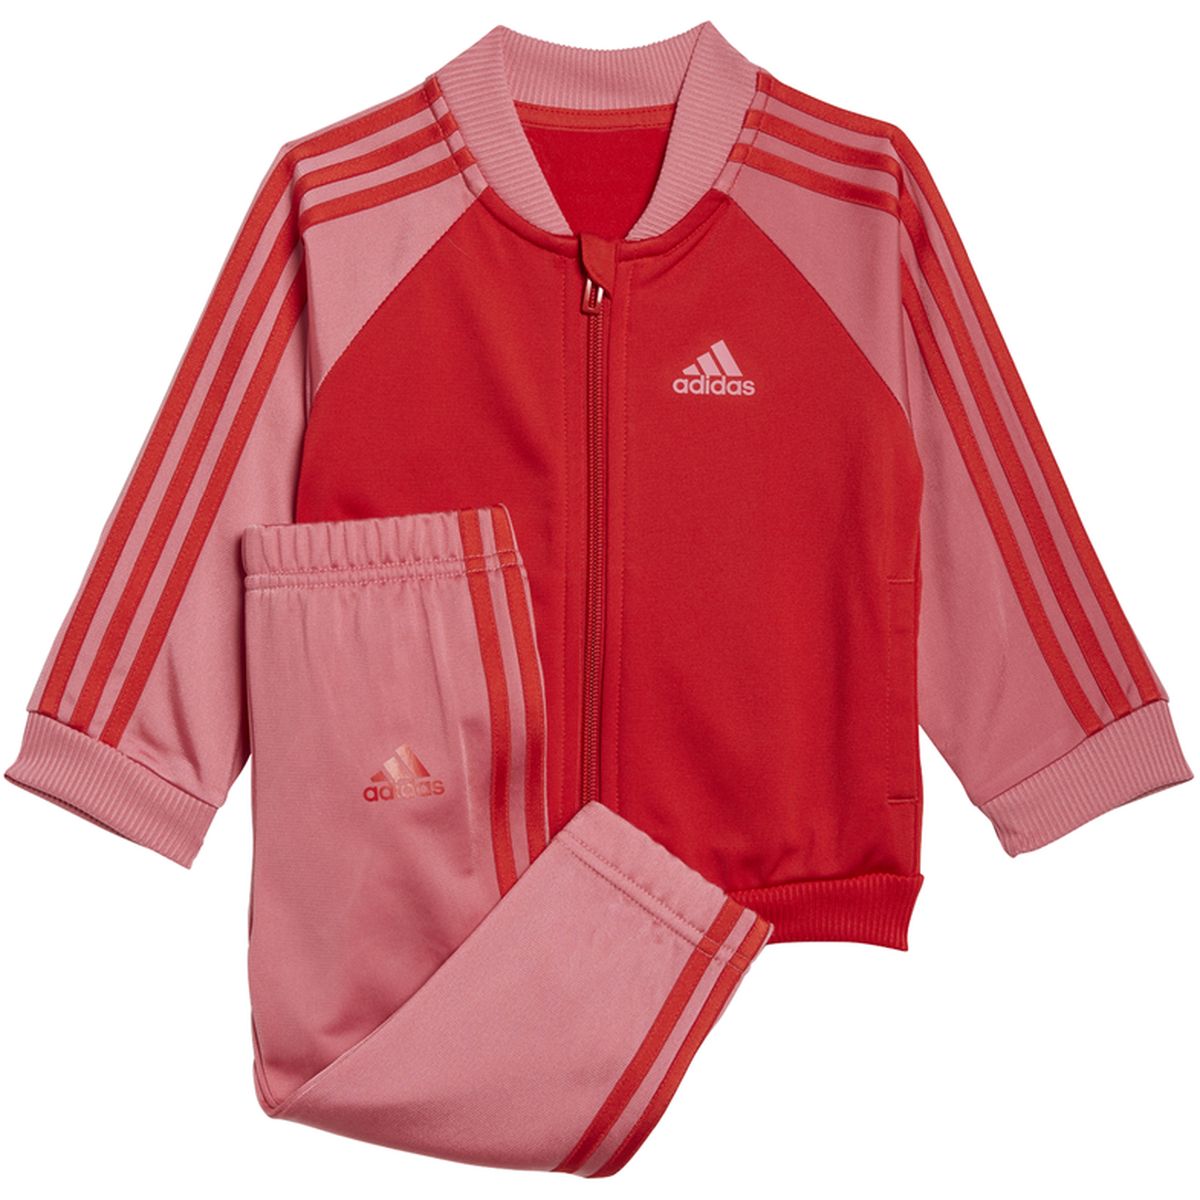 Adidas 3-Streifen Tricot Trainingsanzug Kinder